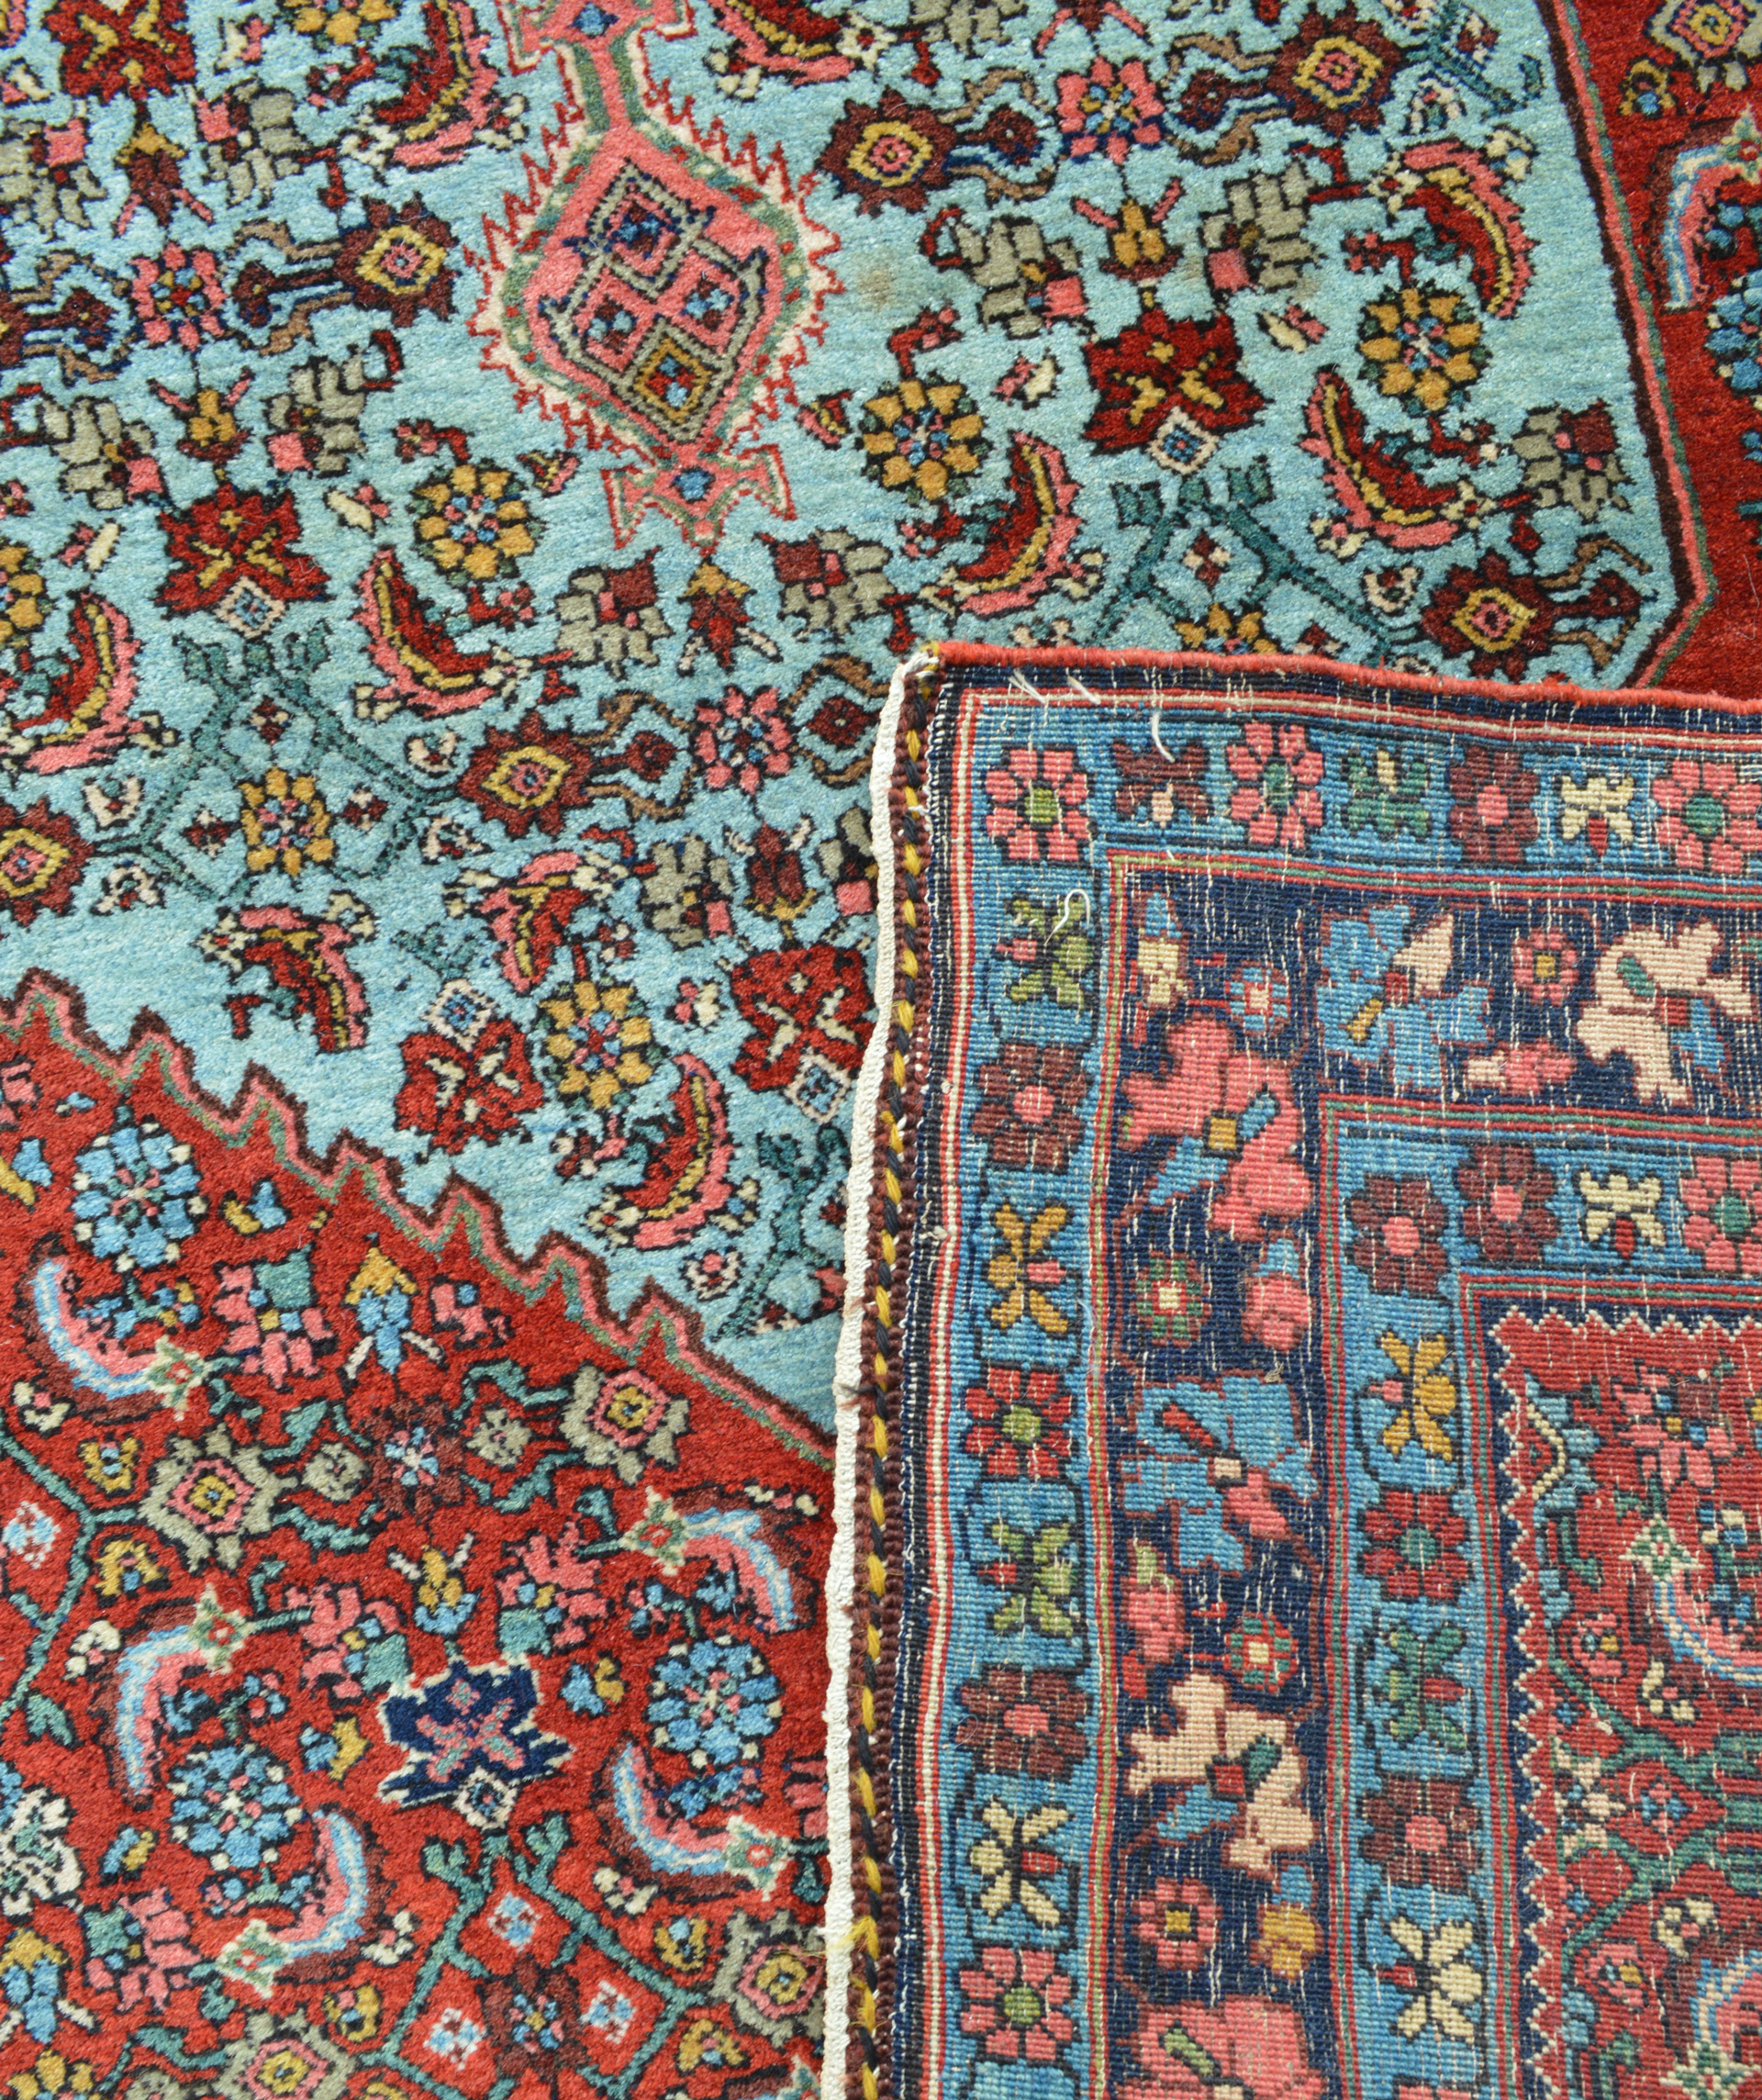 Weave detail from an antique Persian Bijar rug.